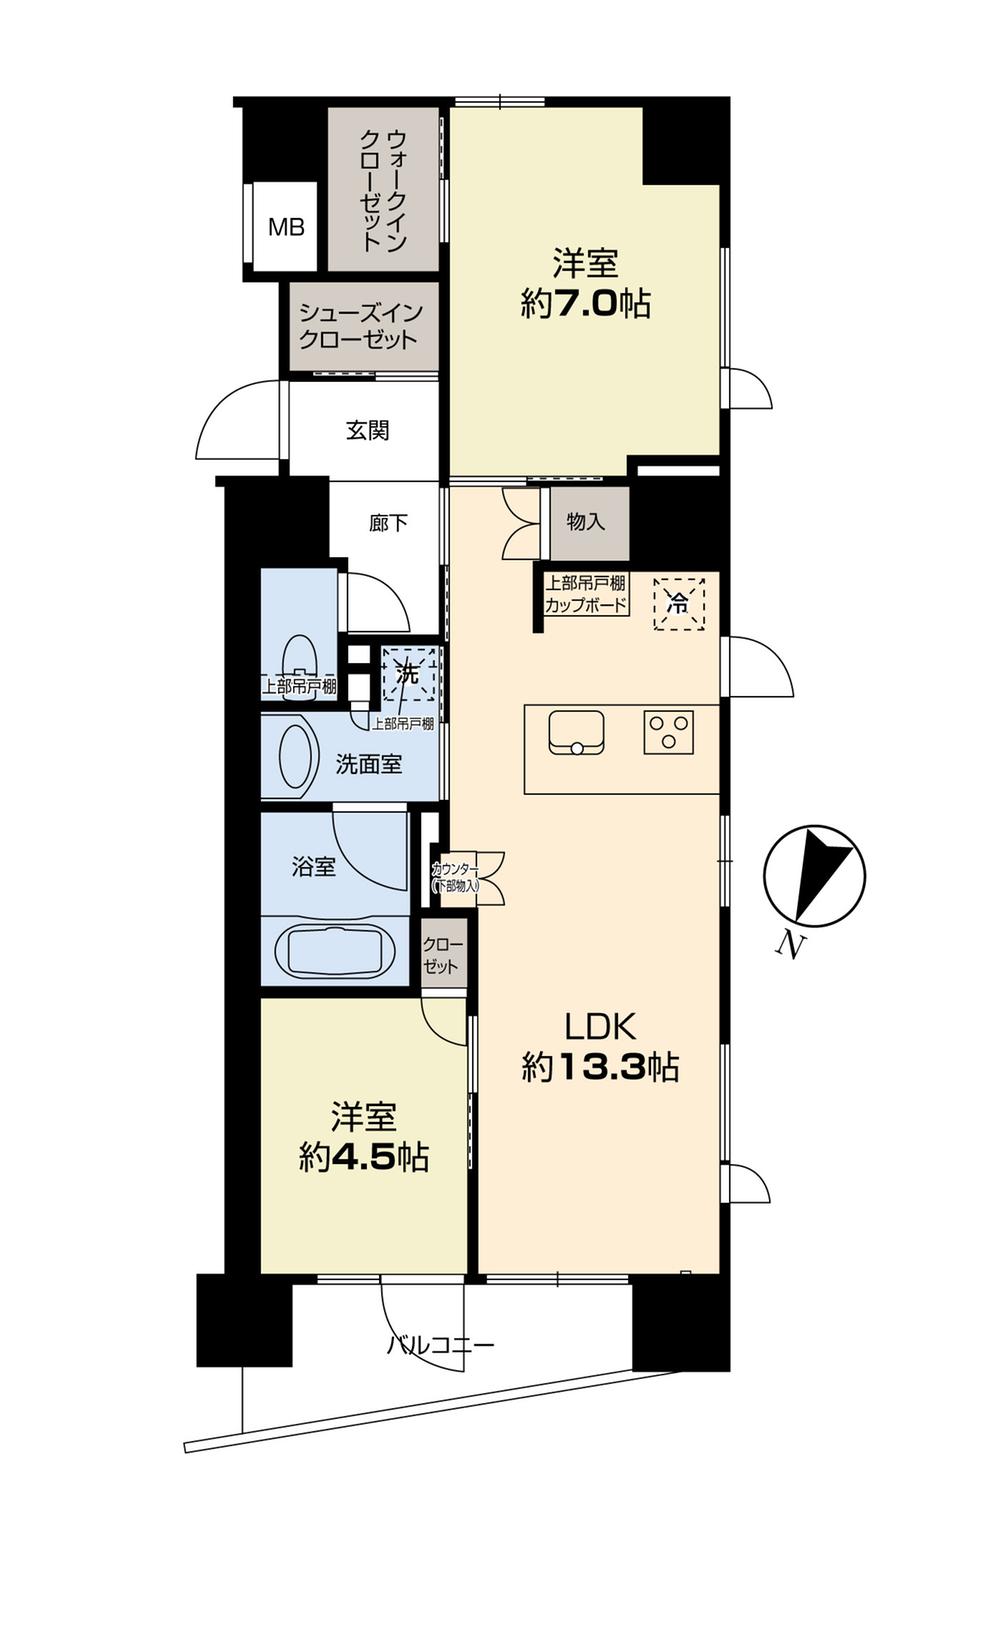 Floor plan. 2LDK, Price 43 million yen, Occupied area 60.23 sq m , Balcony area 6.01 sq m